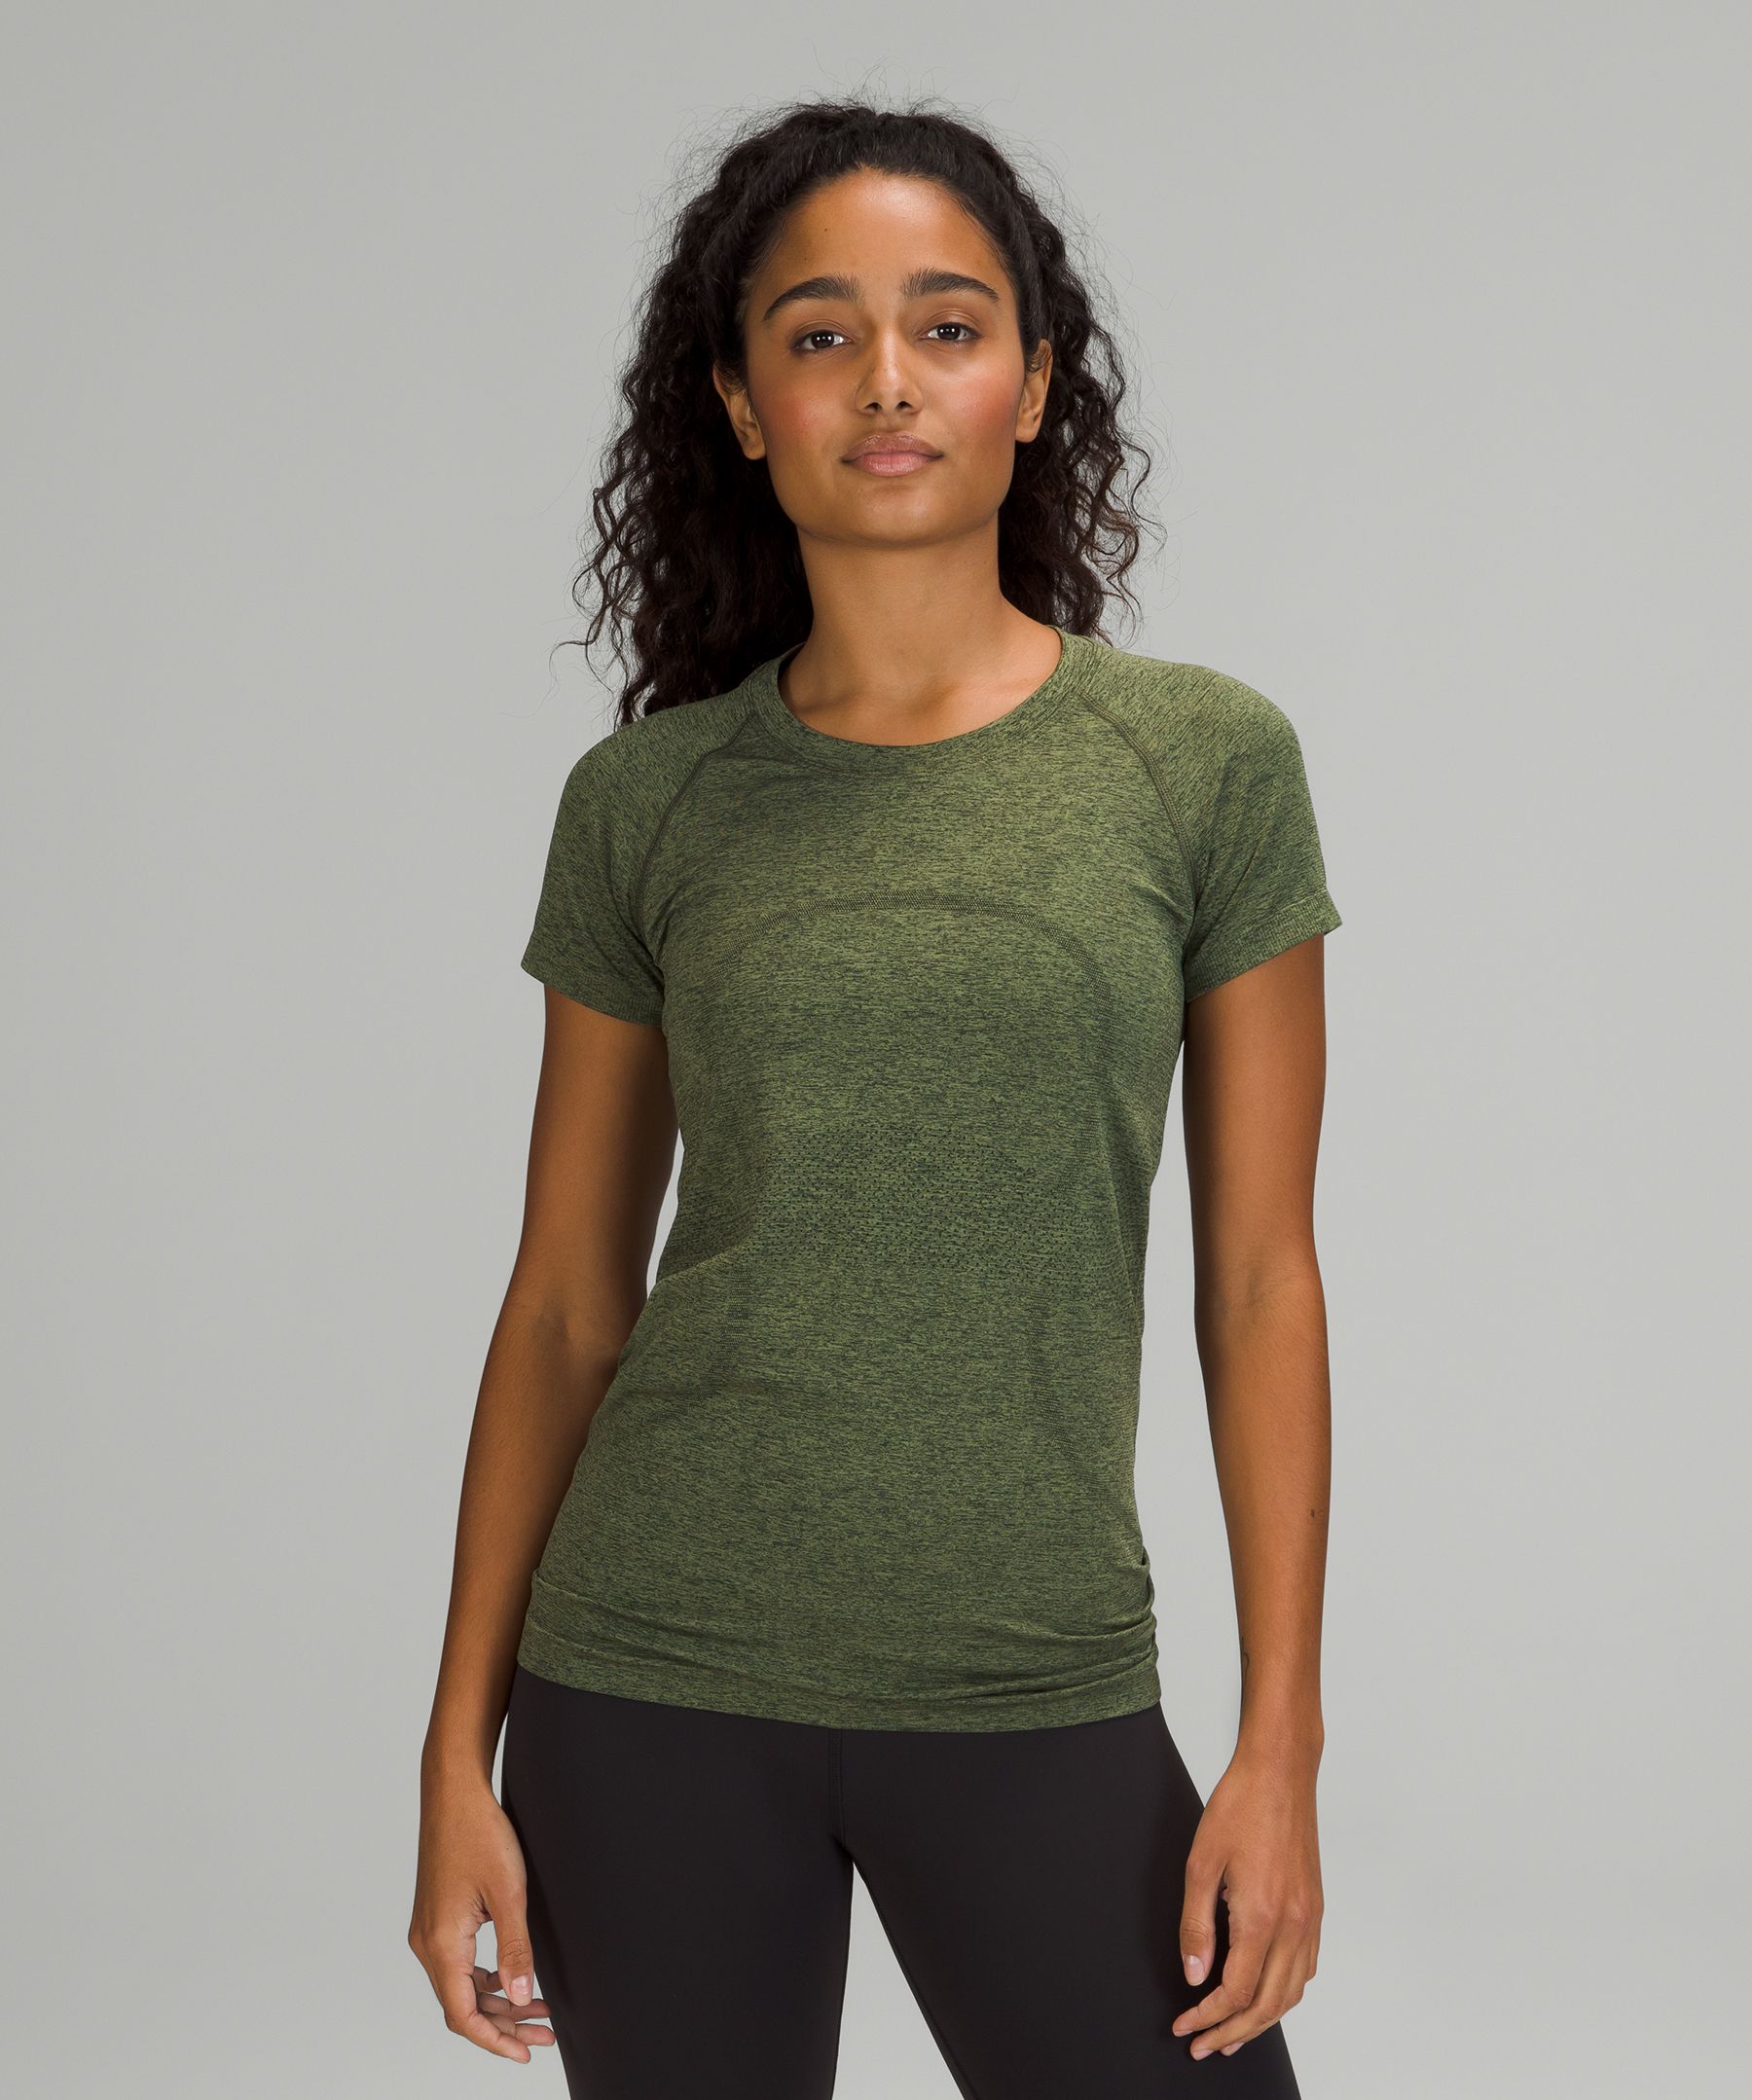 Lululemon Swiftly Tech Short Sleeve Shirt 2.0 In Rainforest Green